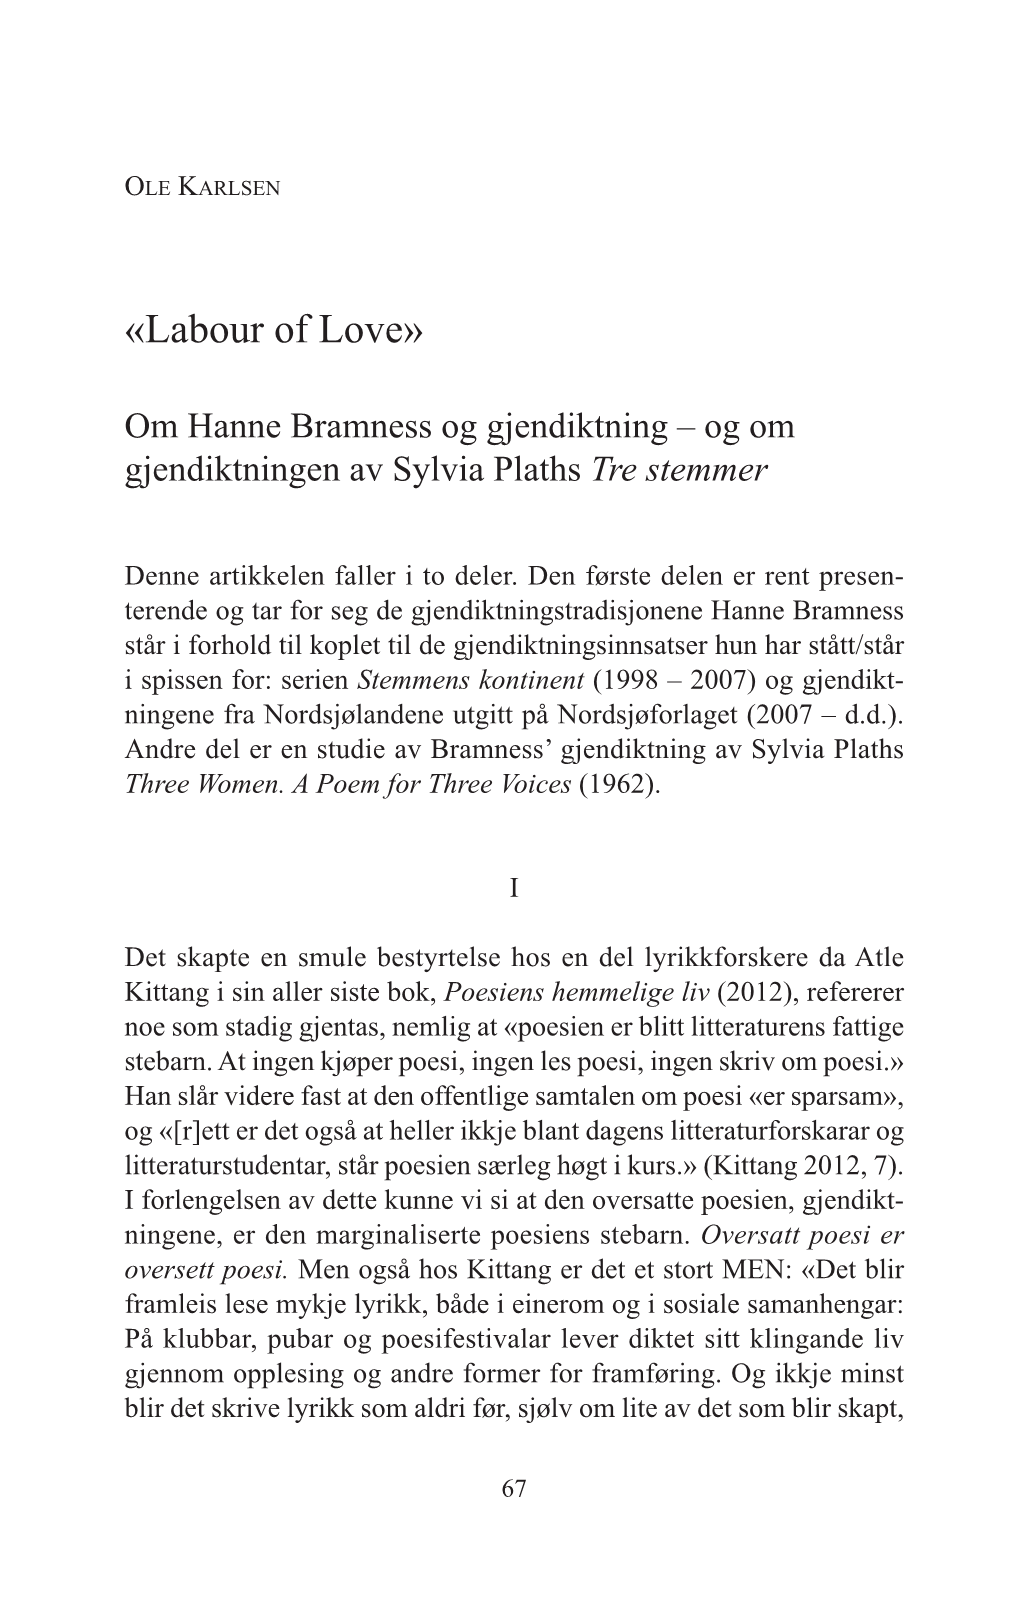 «Labour of Love»